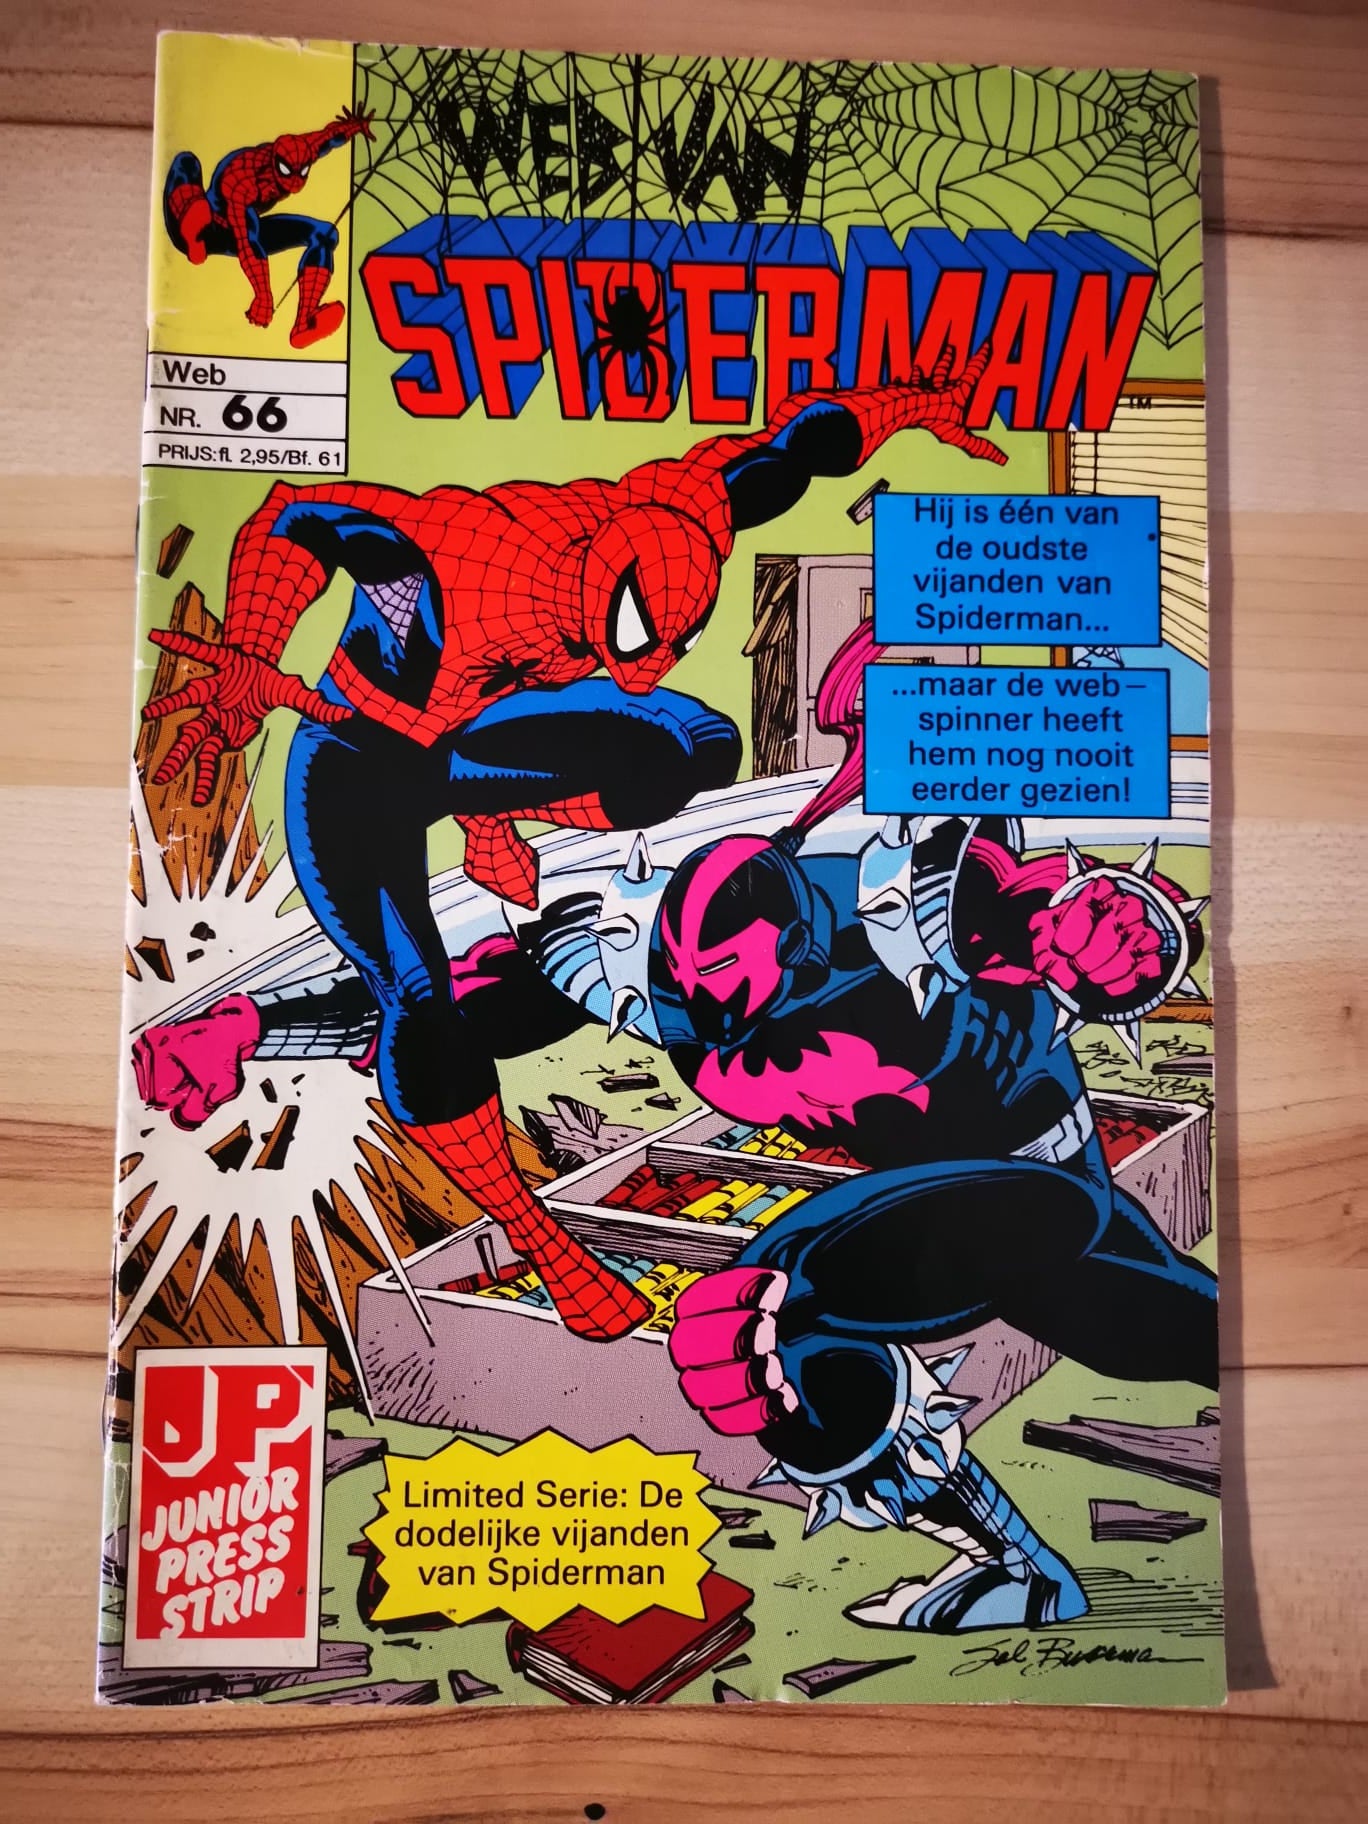 Web van spiderman #66